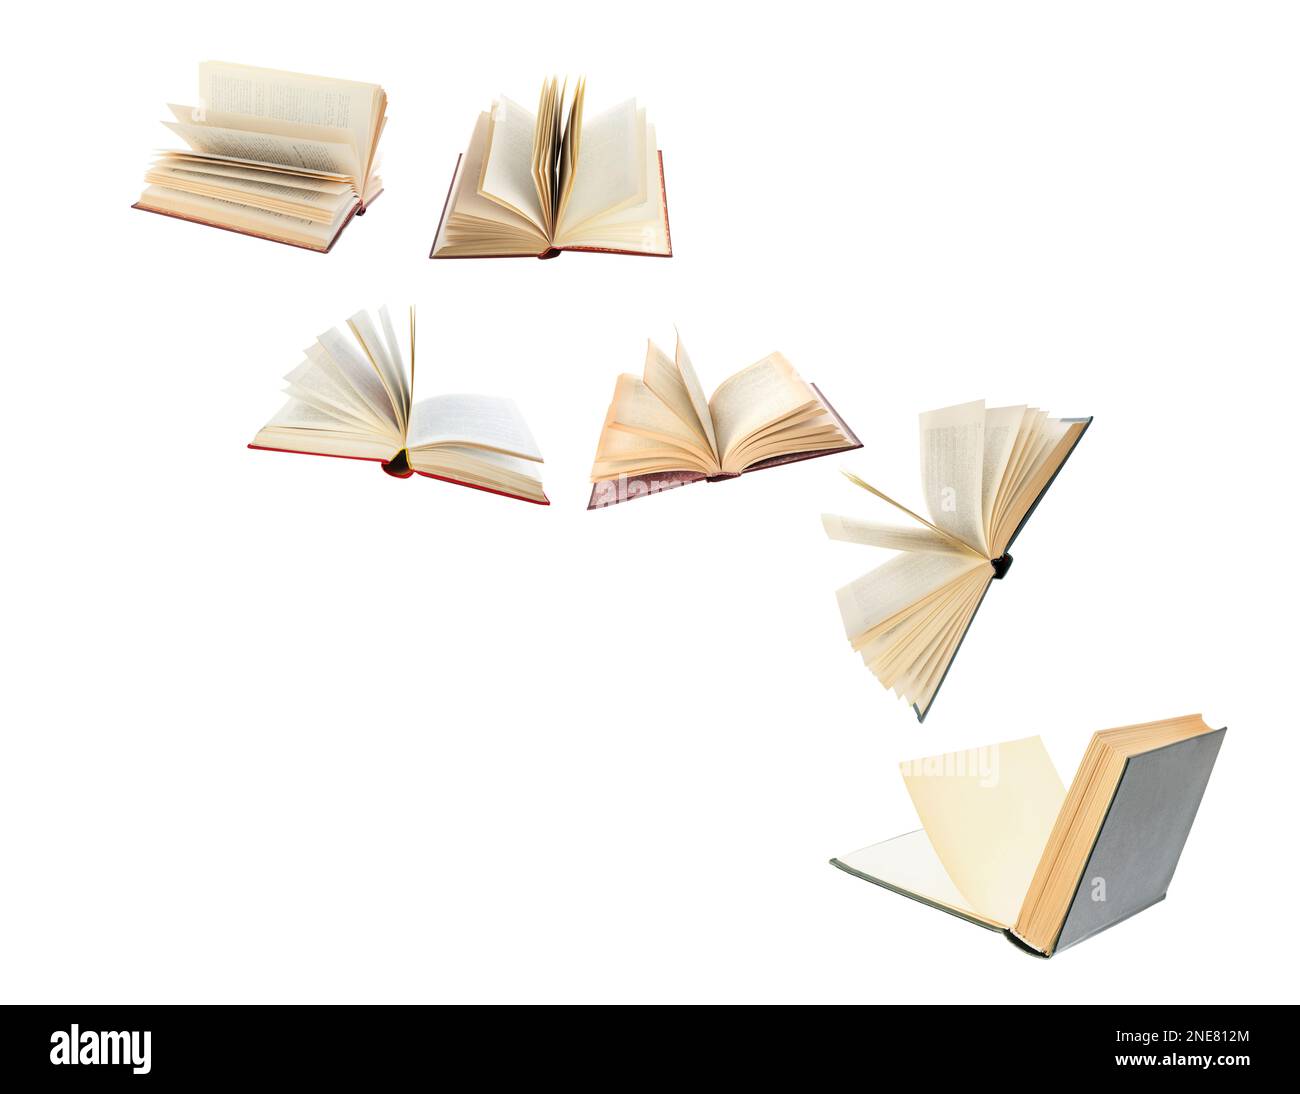 Set with flying books on white background Stock Photo